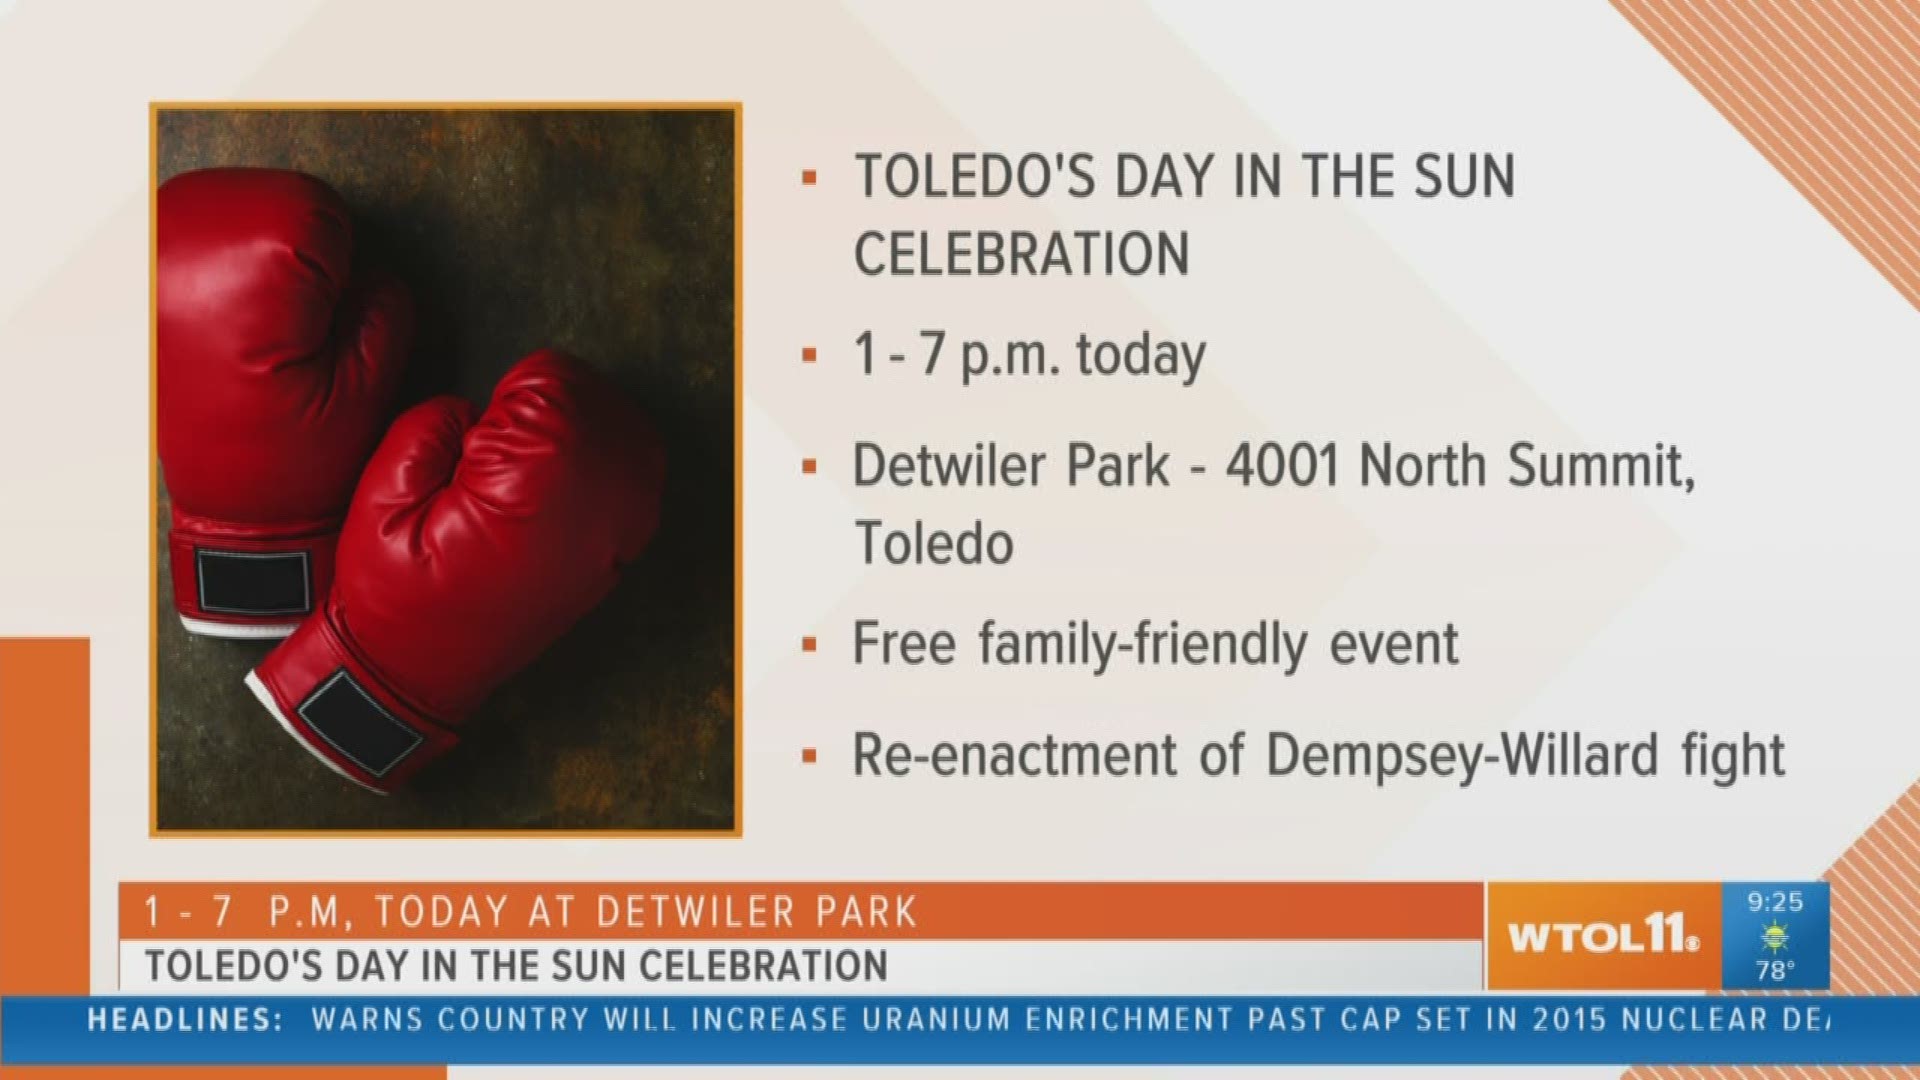 100 years ago, the Willard vs. Dempsey boxing match put Toledo in the international spotlight. Mayor Wade Kapszukiewicz invites you to celebrate the anniversary.